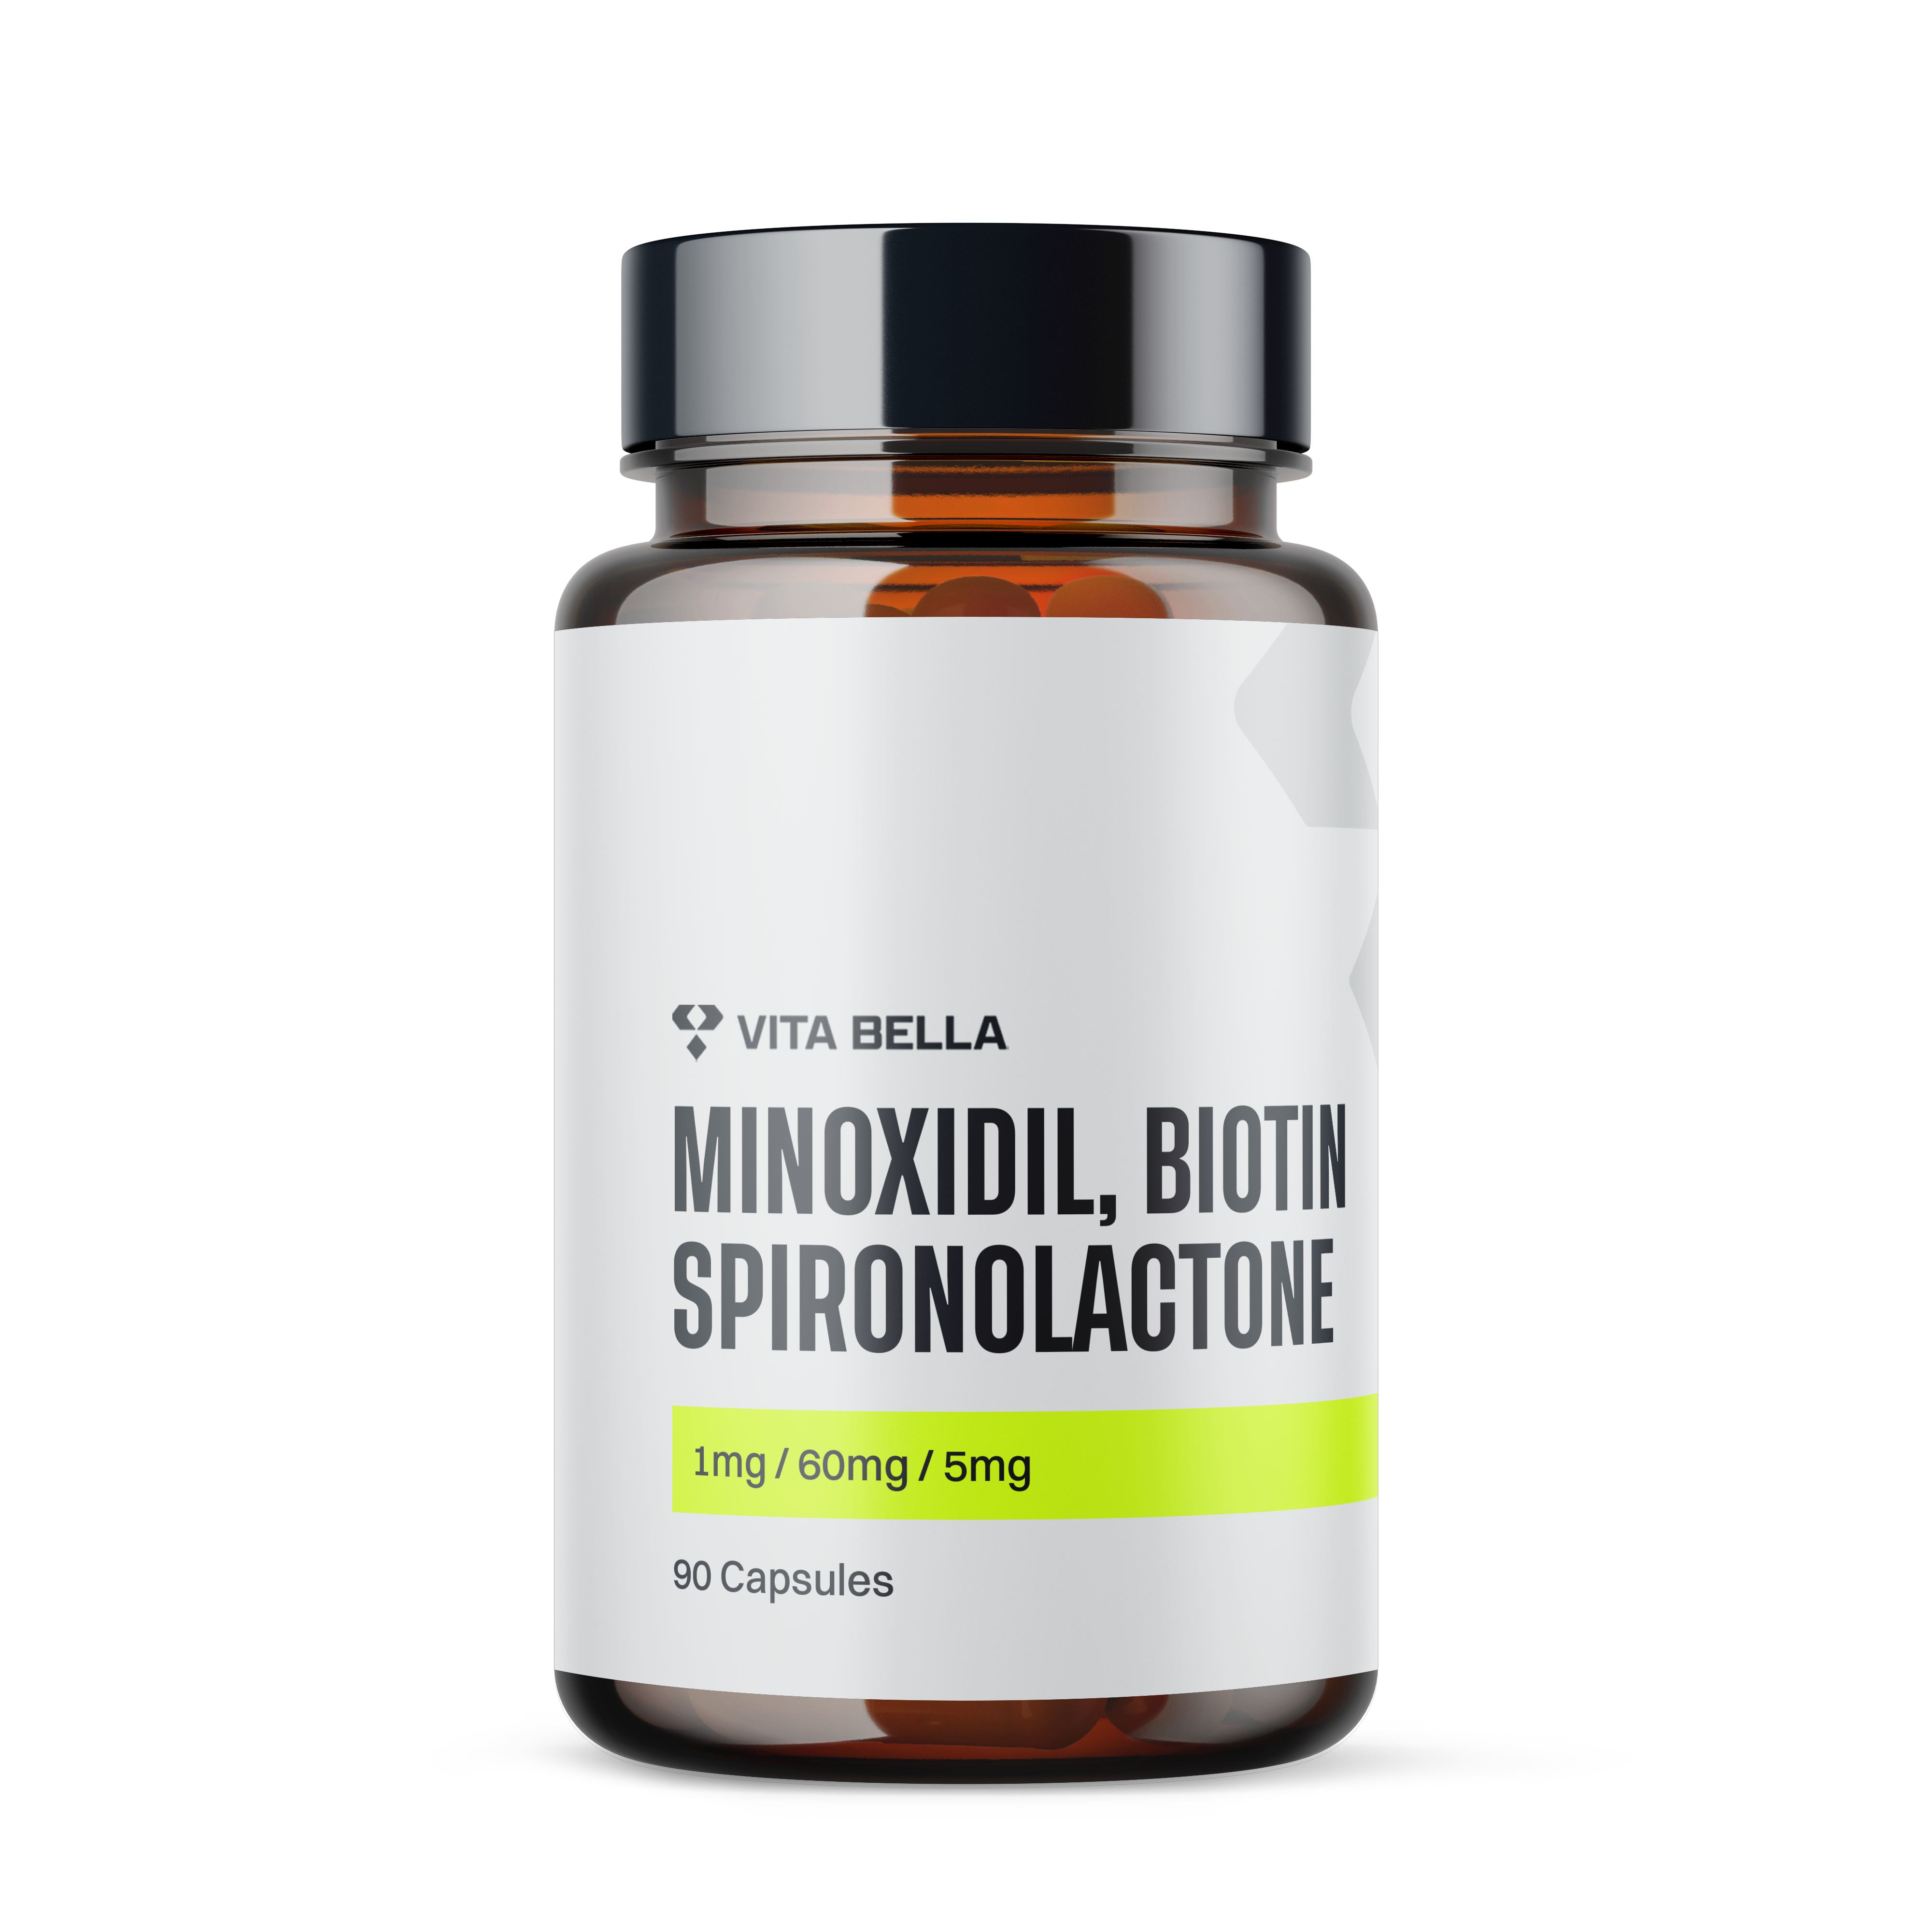 Minoxidil Biotin Spironolactone capsules